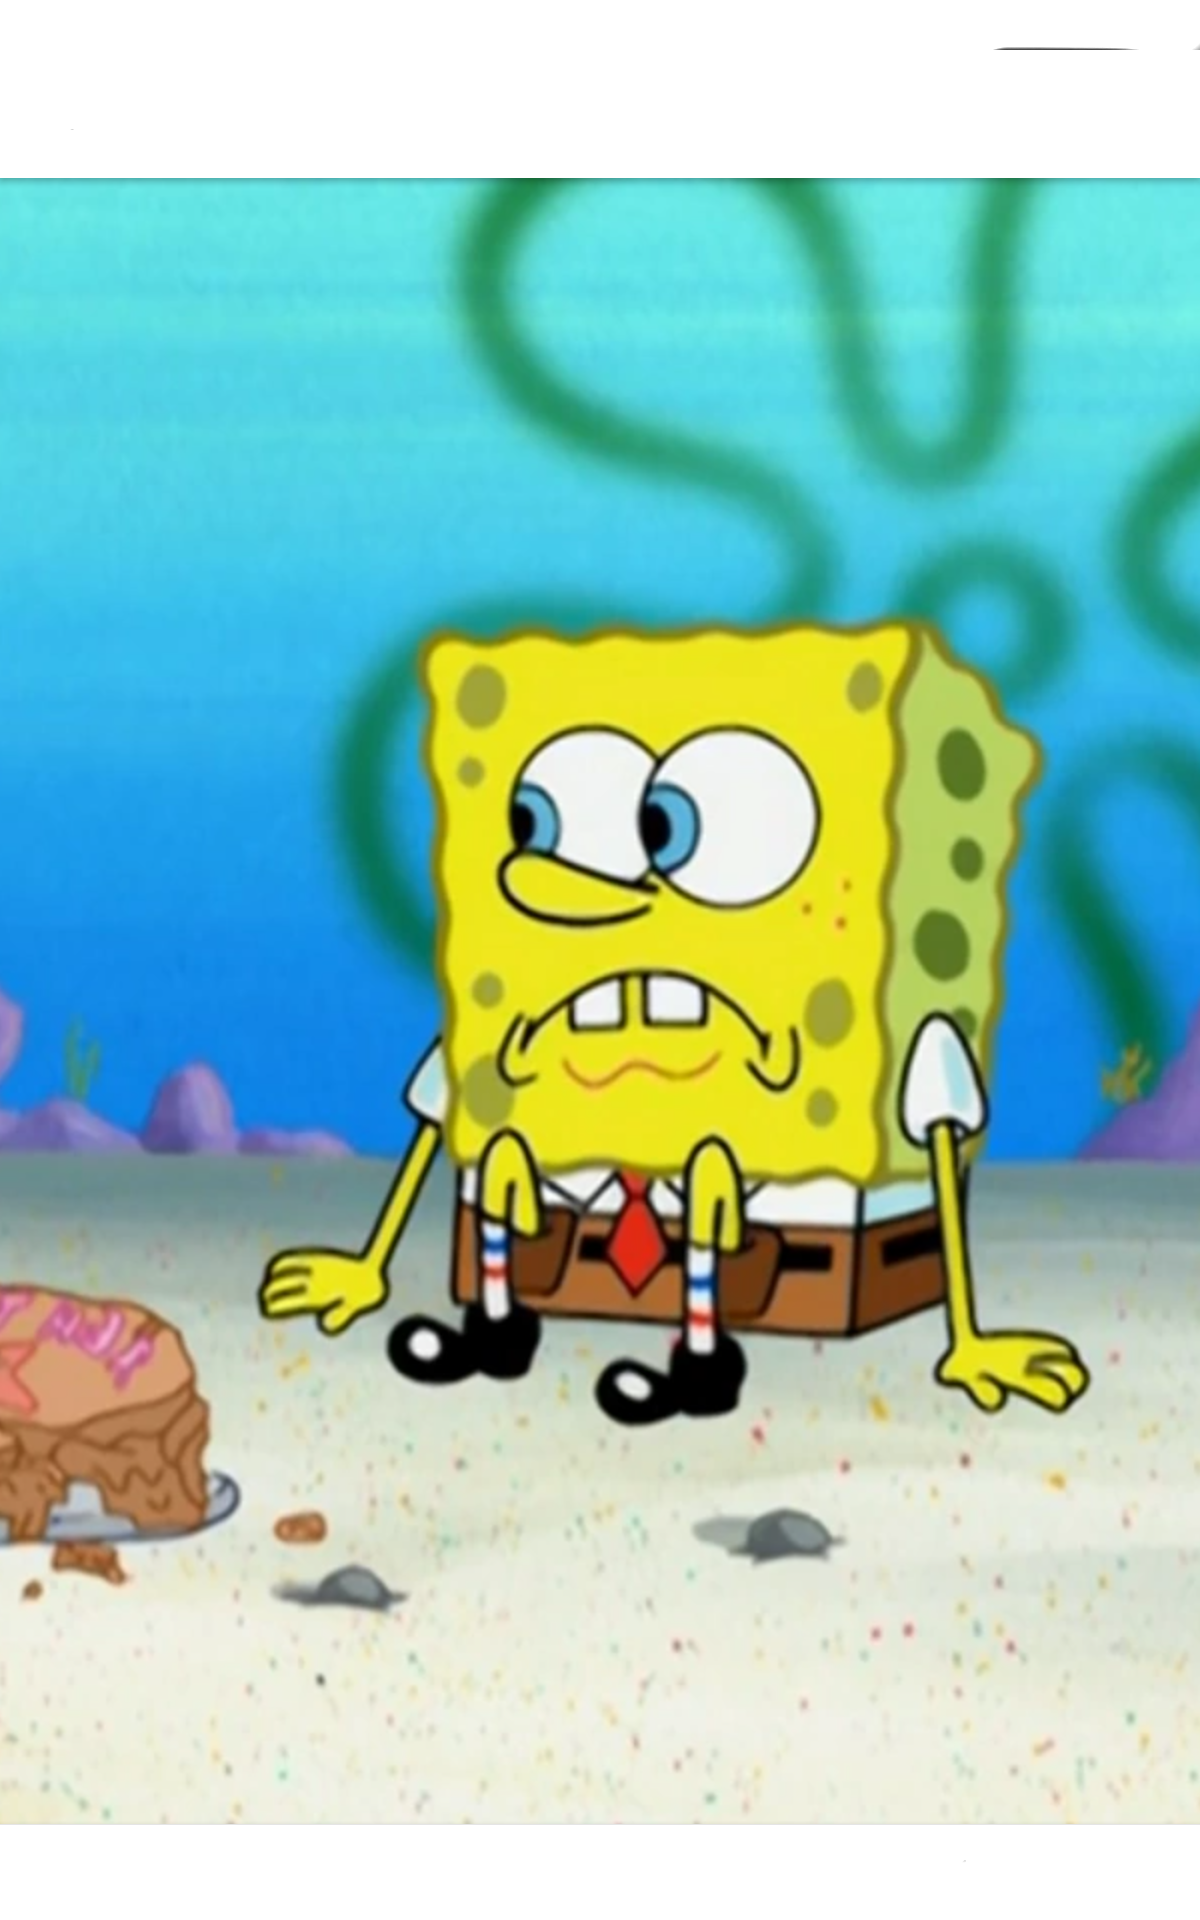 Spongebob has Eyelashes are missing is Errors | Fandom